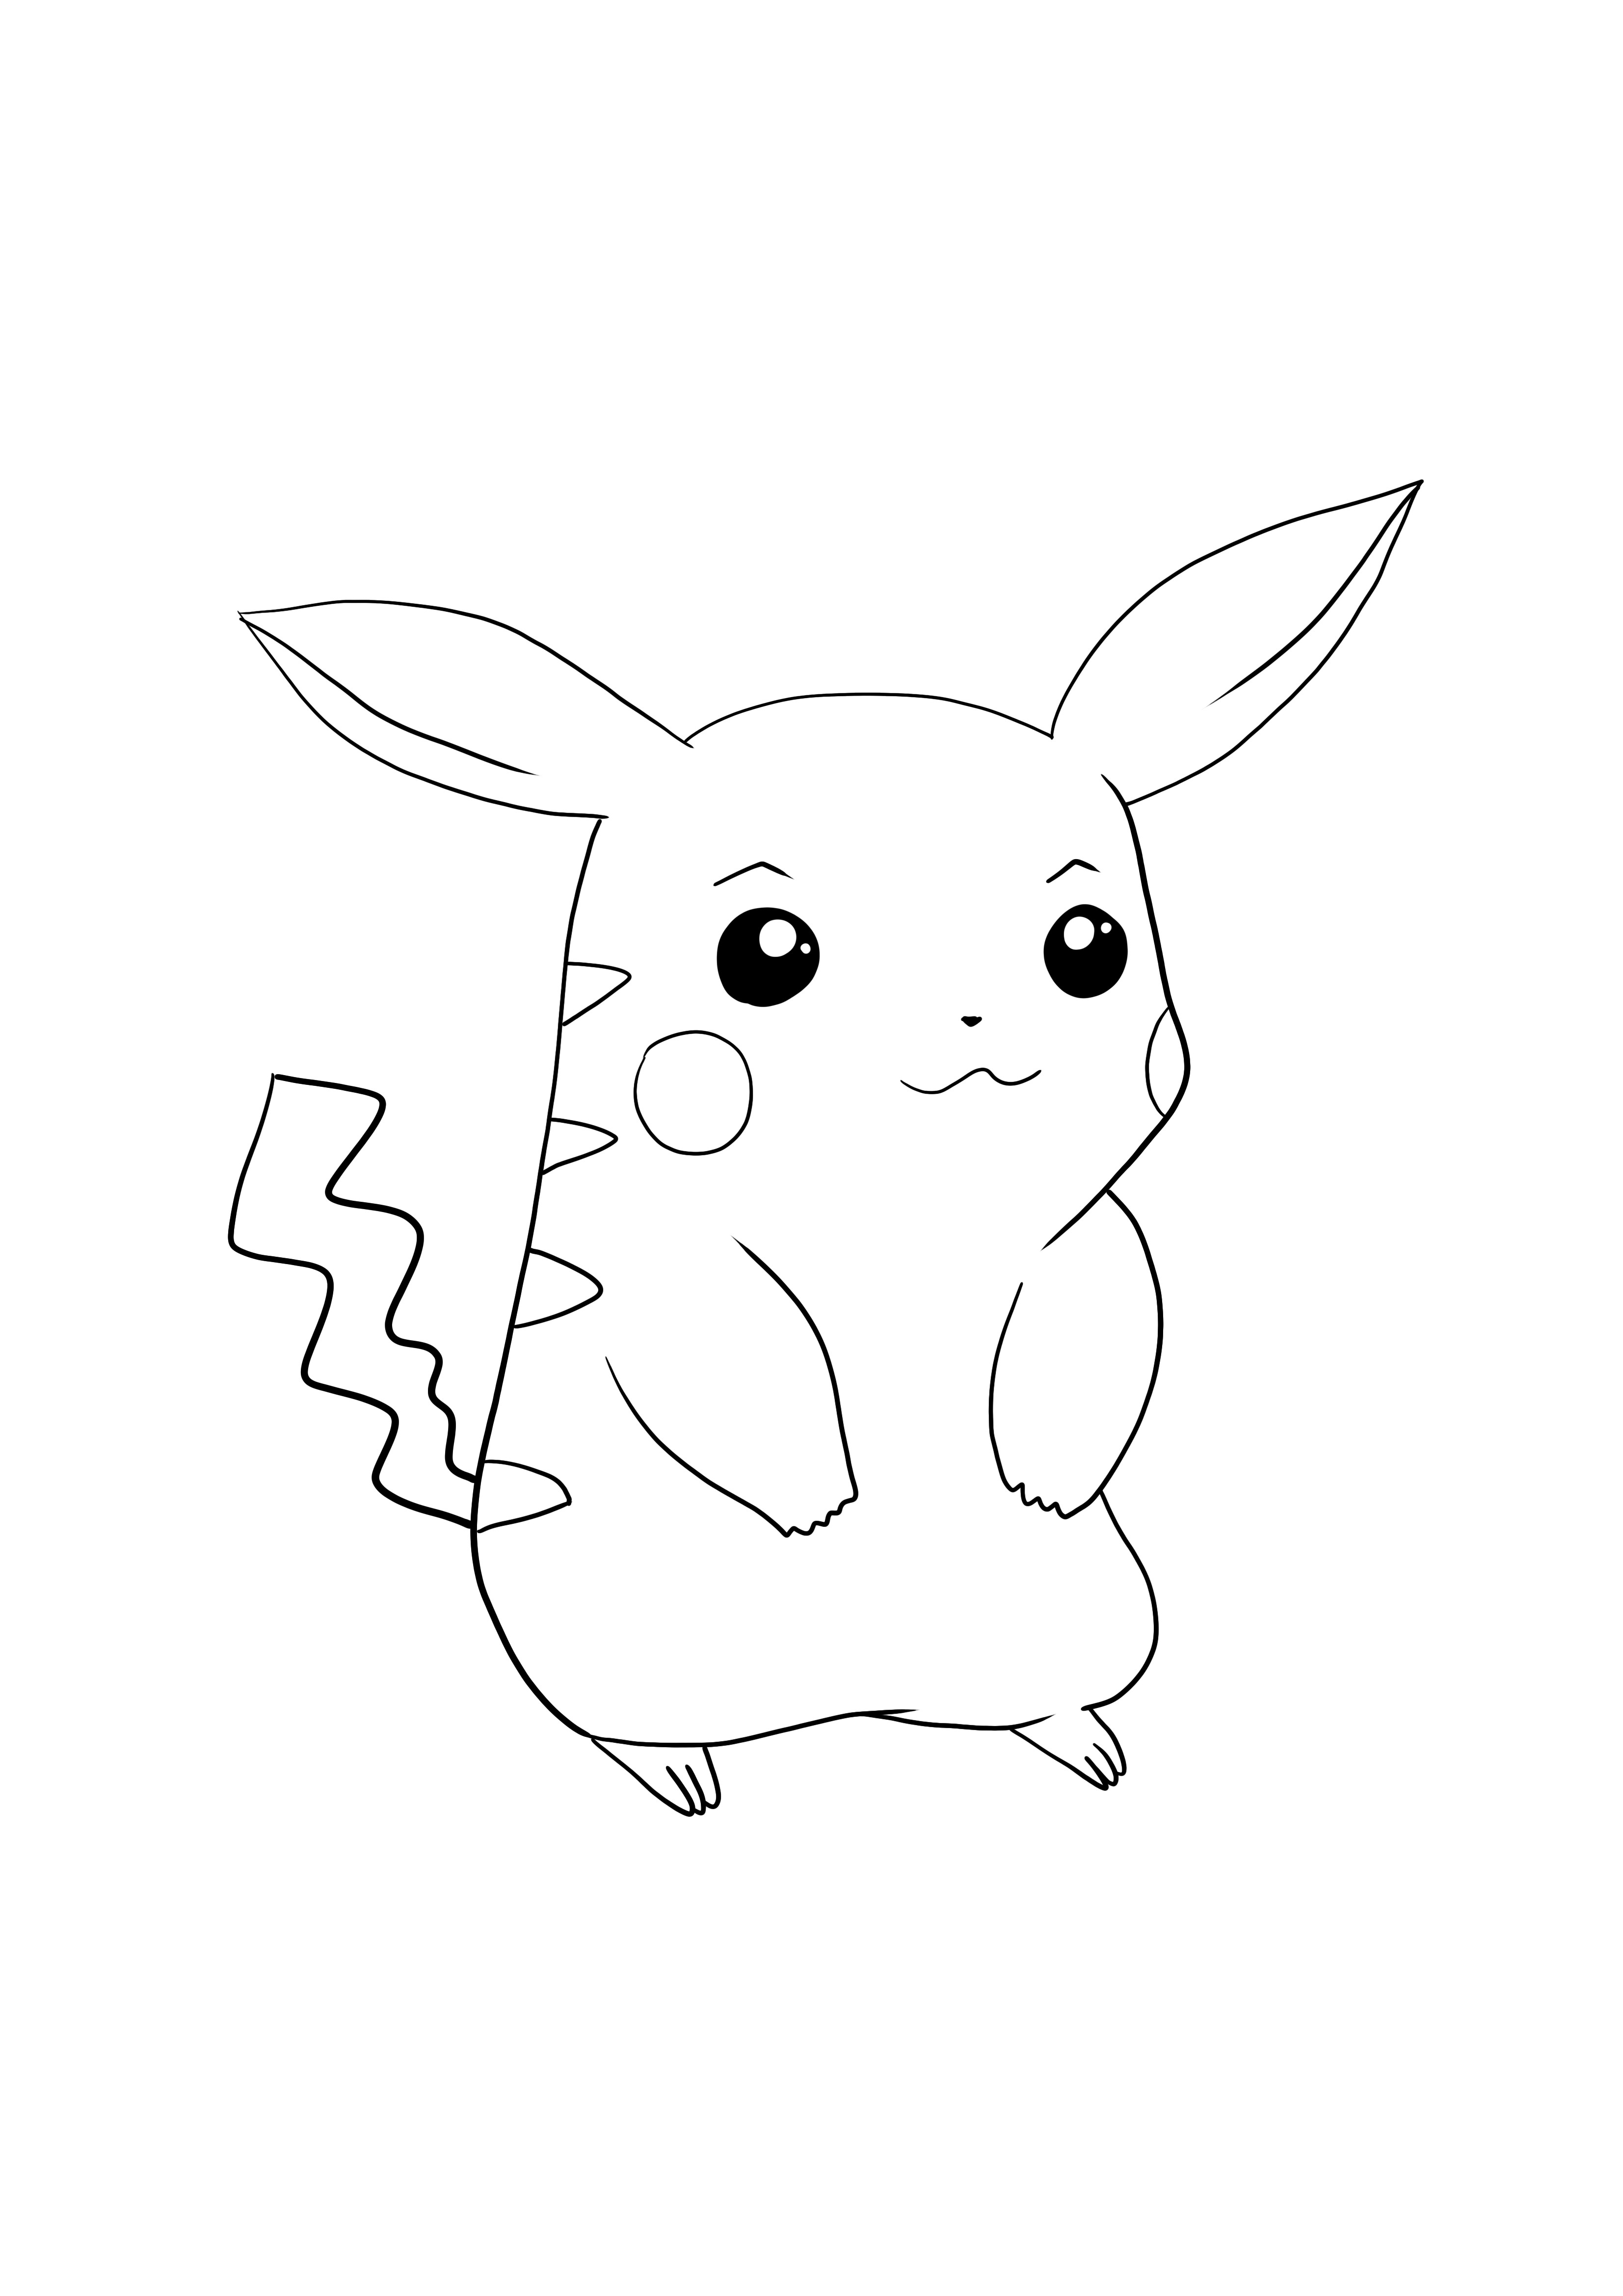 Pikachu-Pokémon go download en kleur gratis pagina kleurplaat